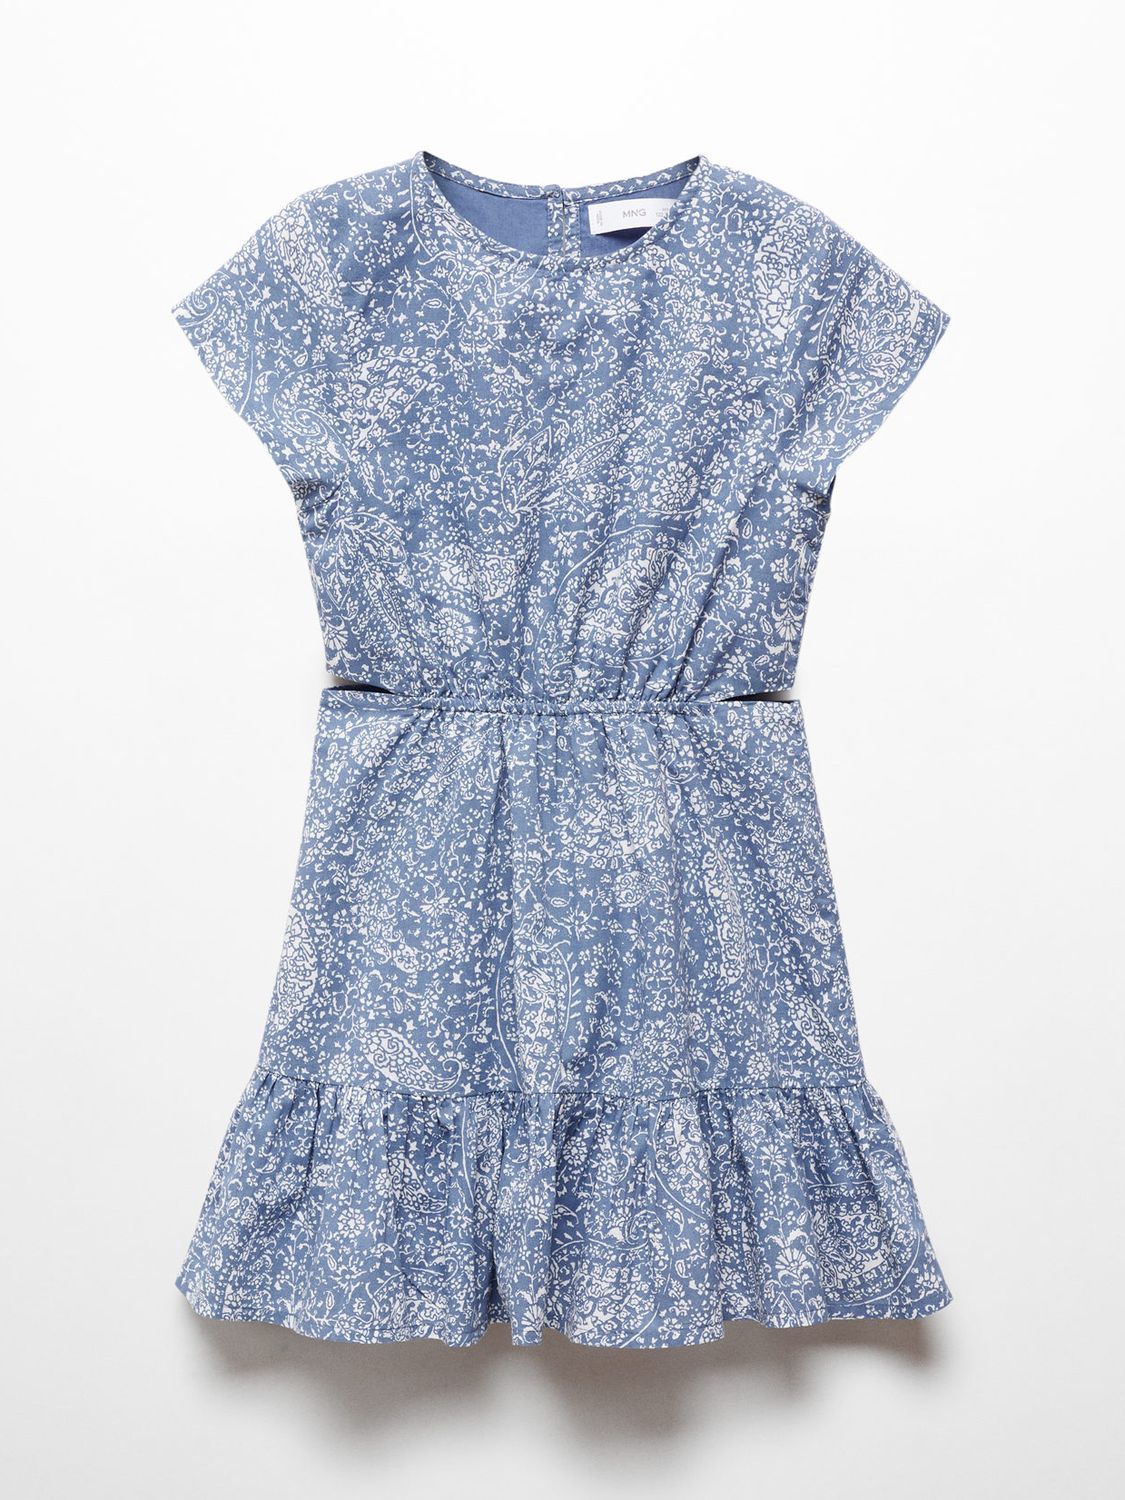 Mango Kids' Peggy Paisley Print Dress, Medium Blue, 10 years